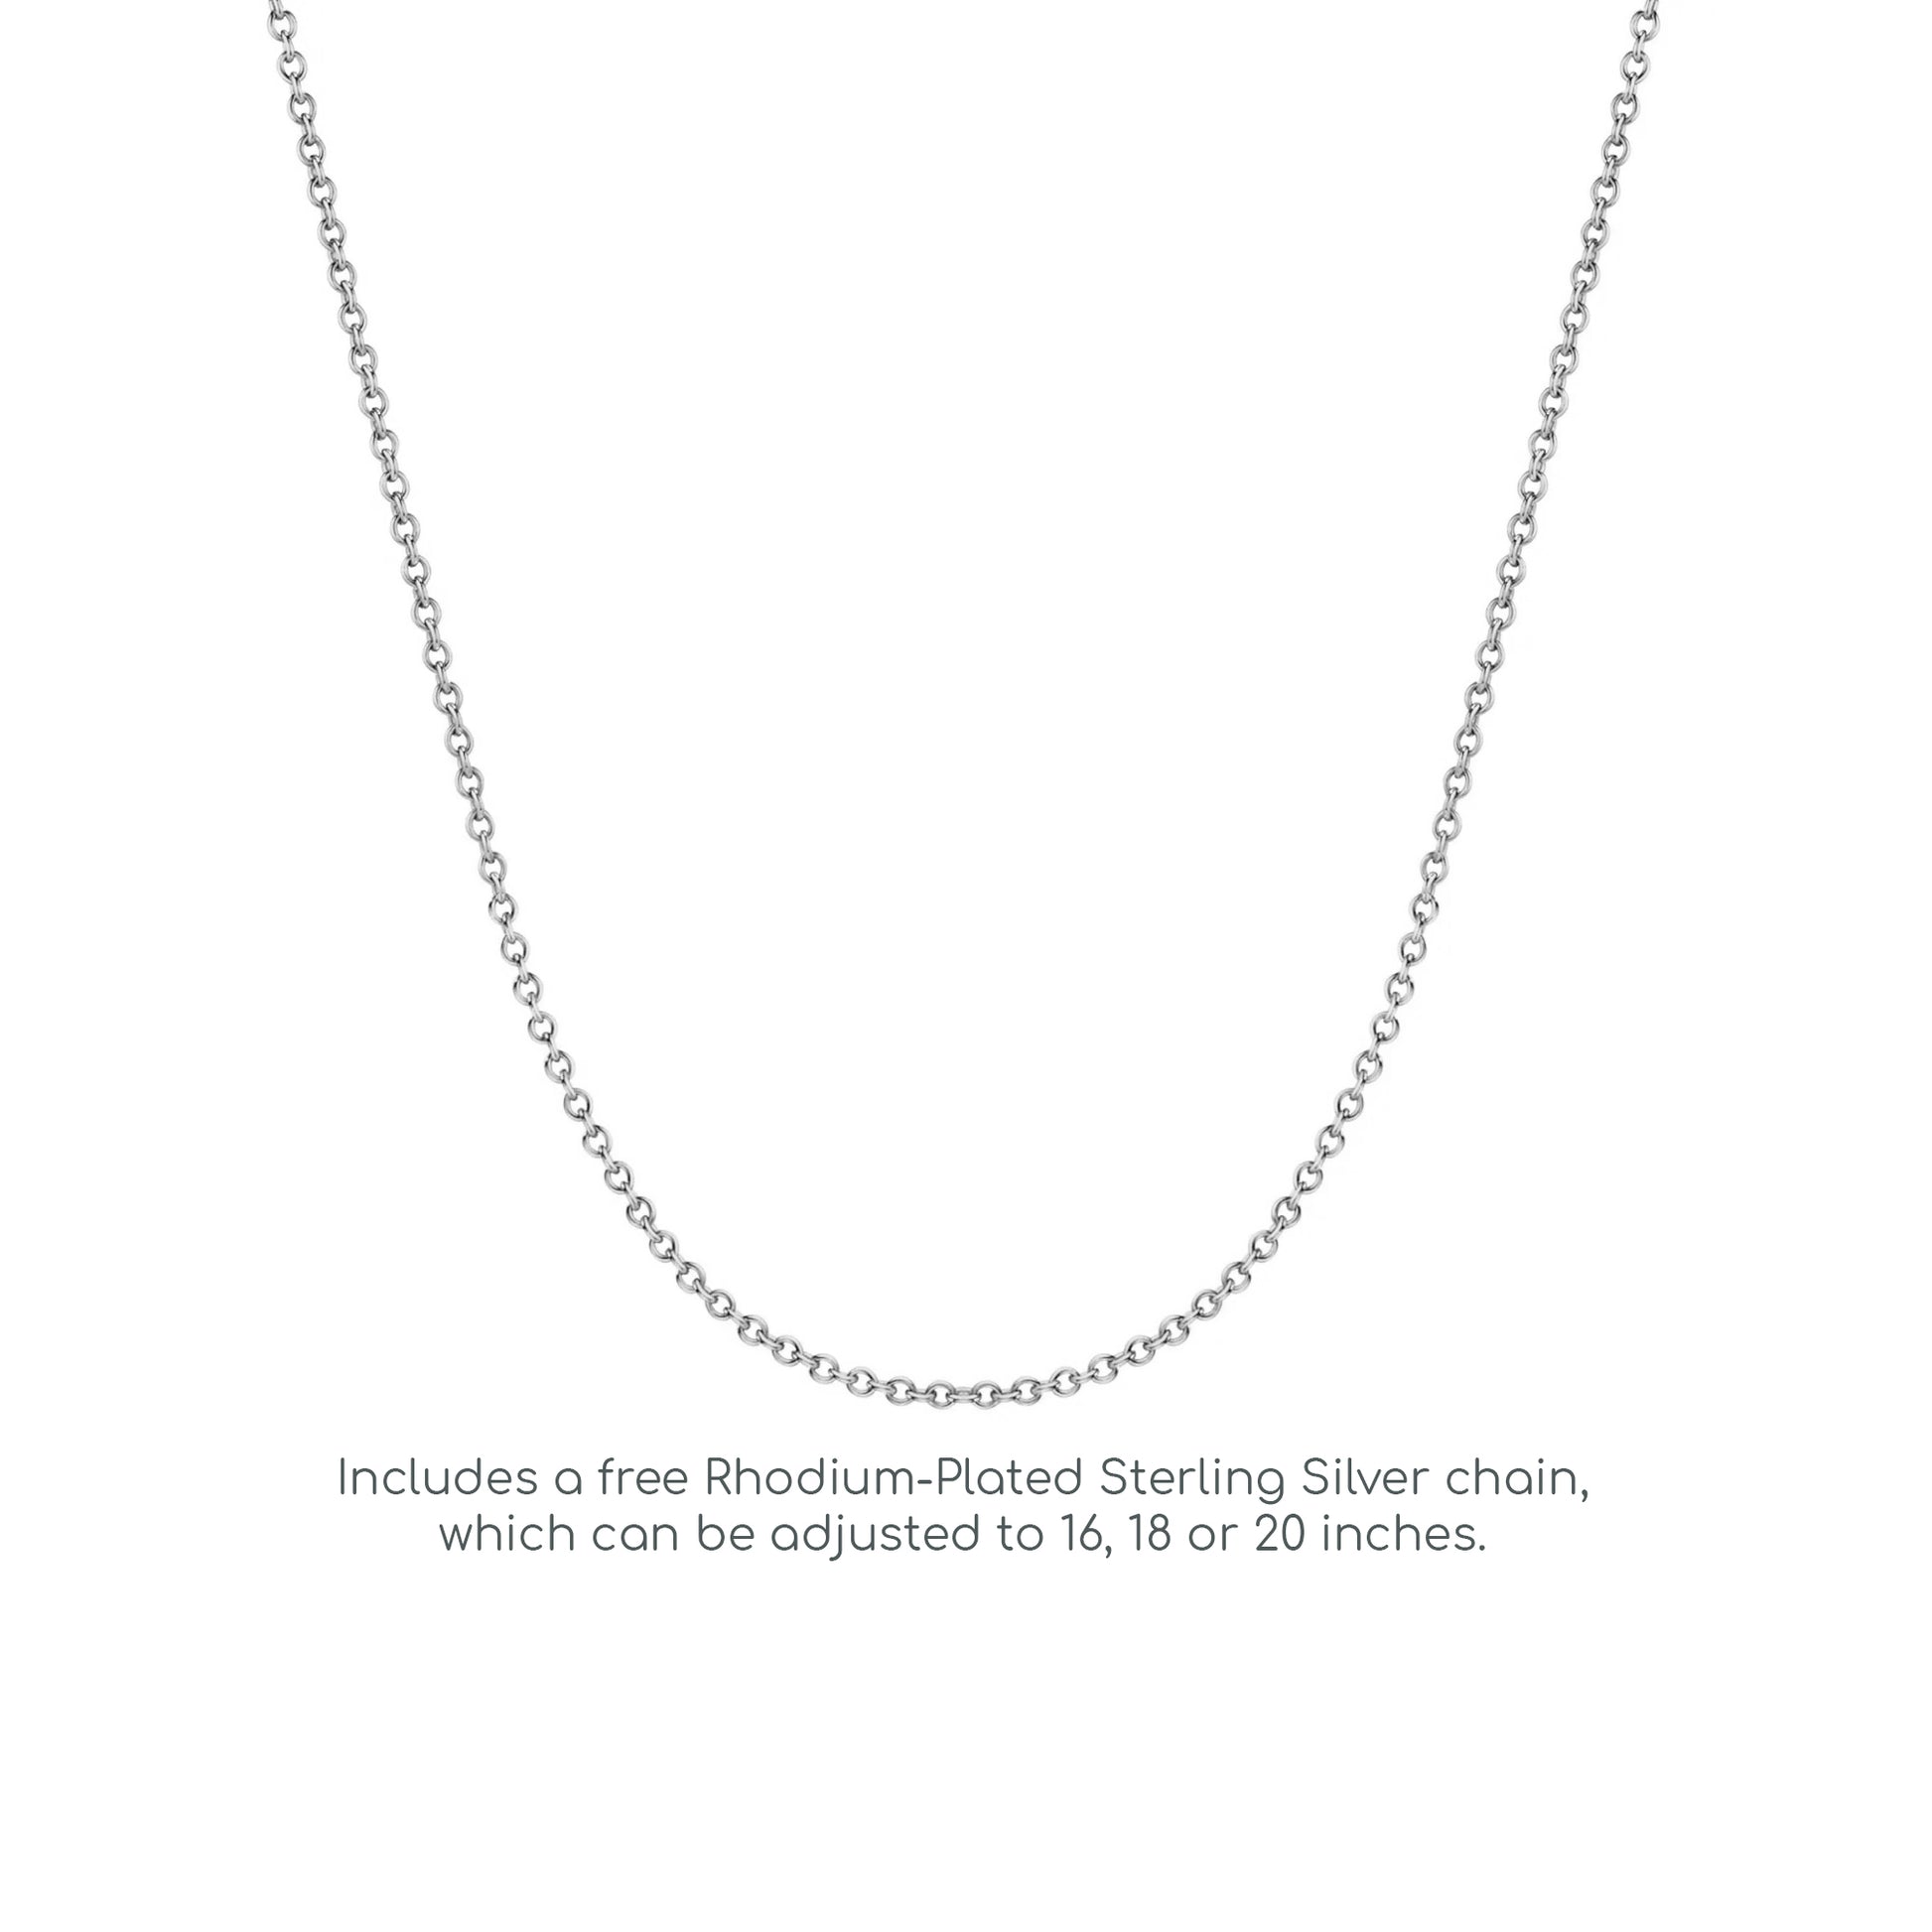 Silver  CZ Number 1 Mum Pendant Necklace 18 inch - GVP220